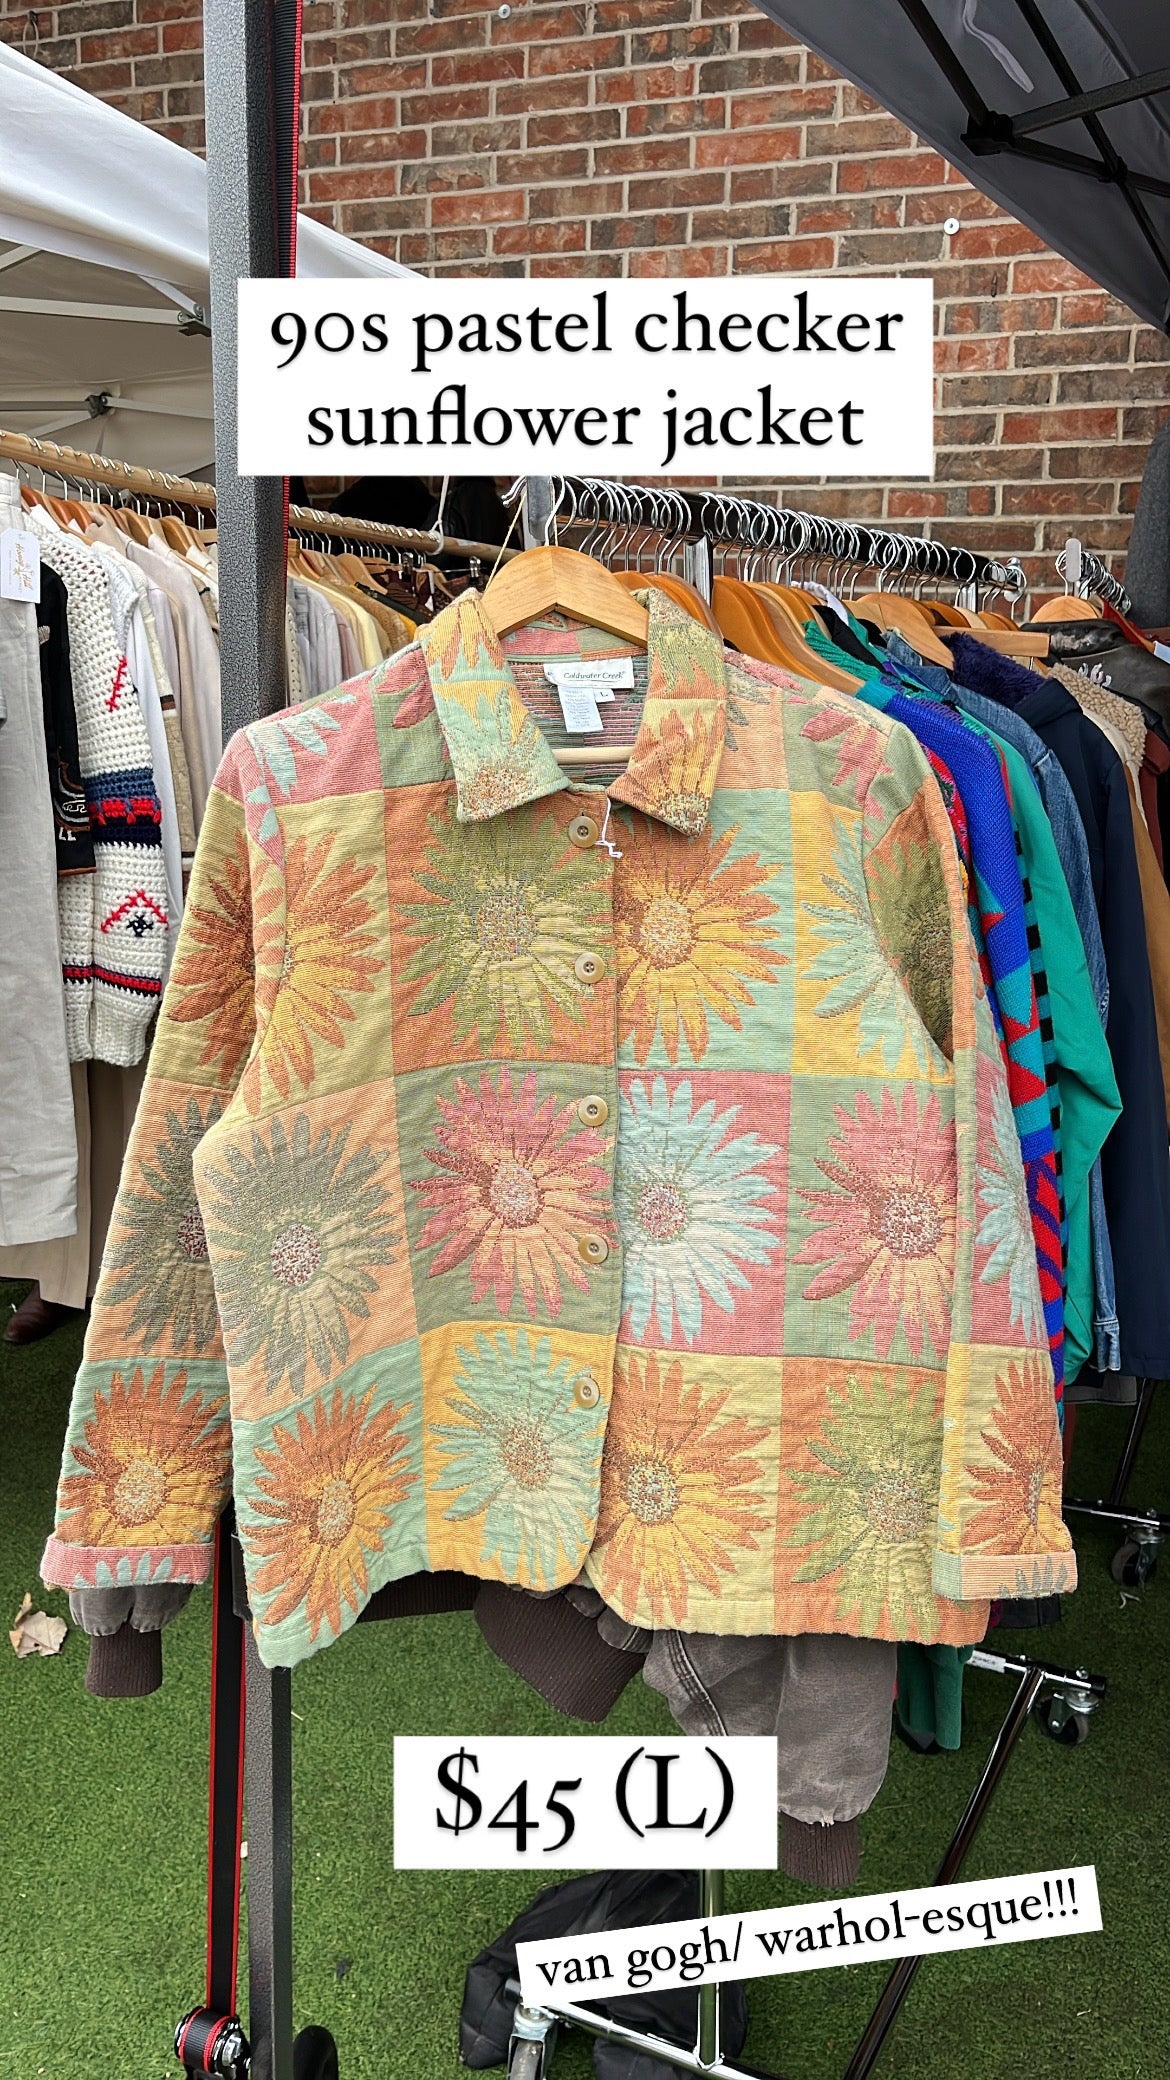 90s pastel sunflower jacket for tatum